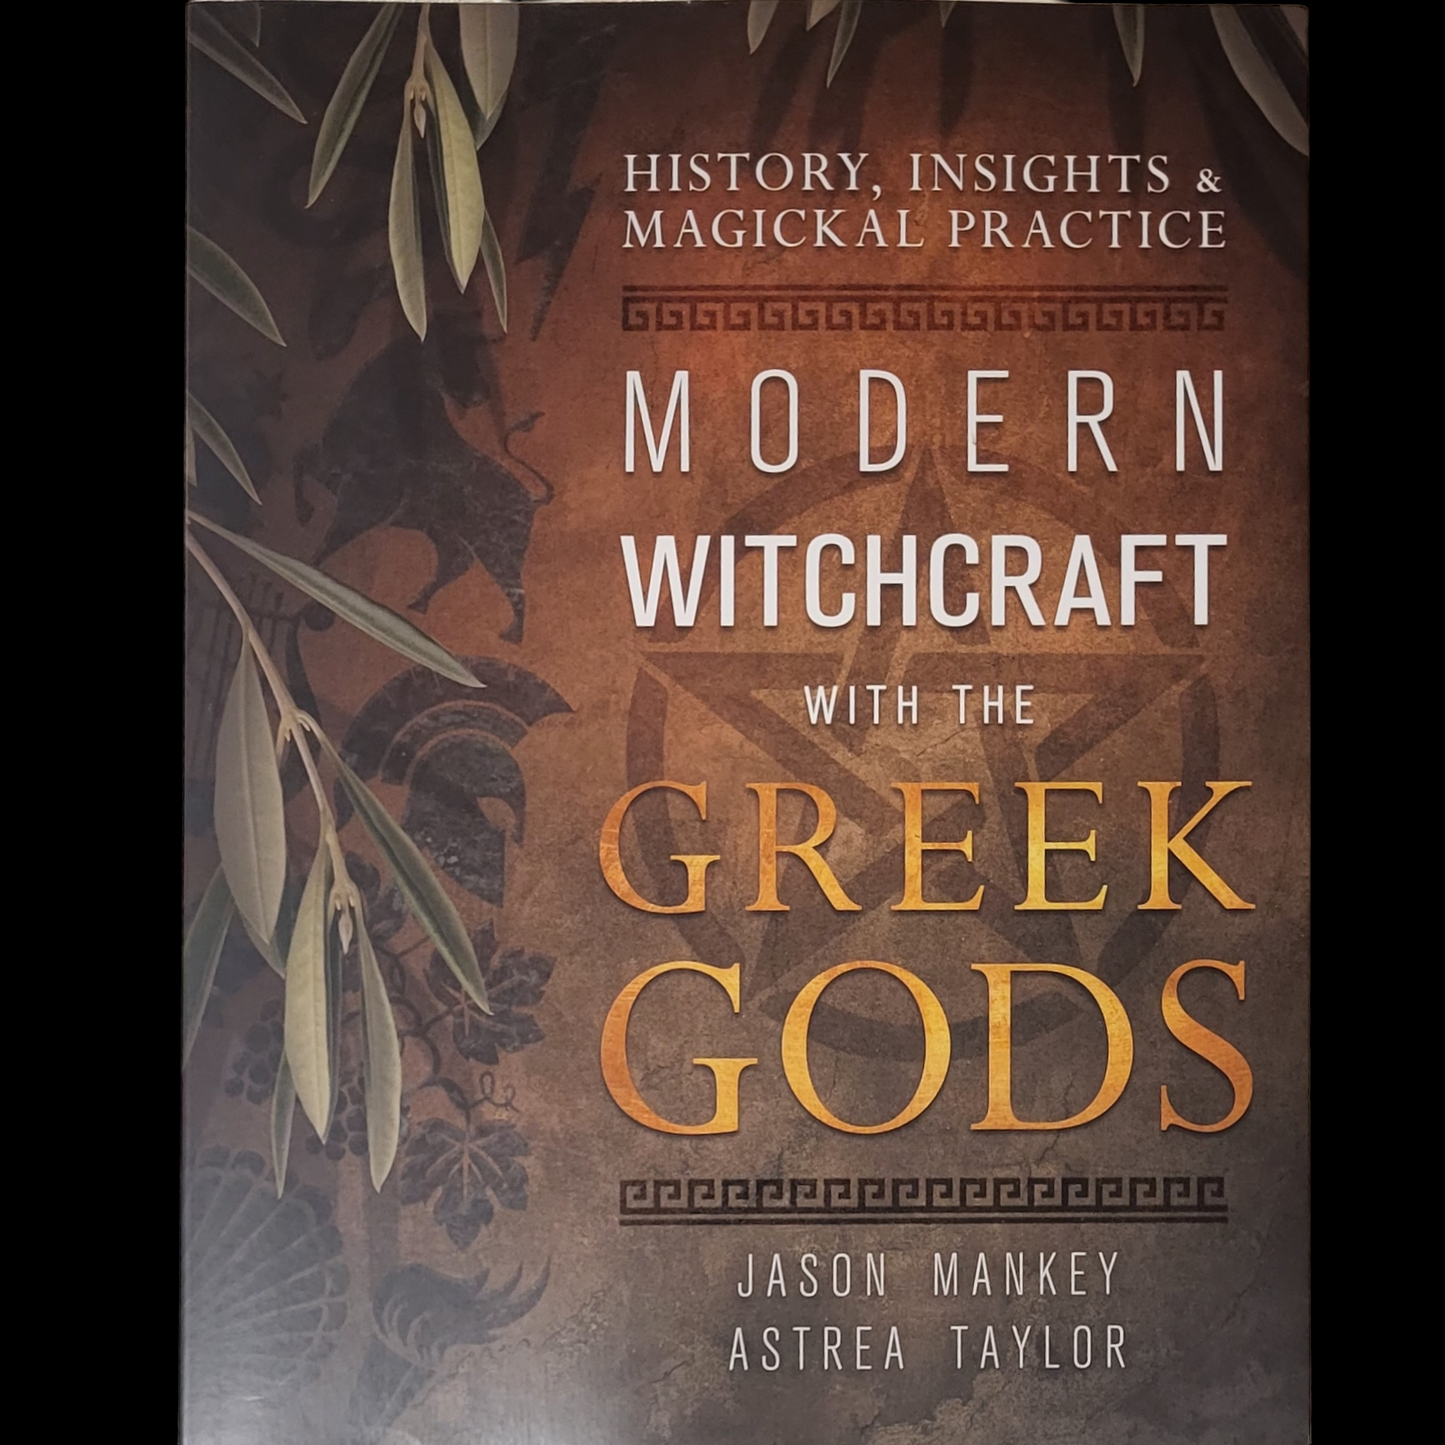 (New) Modern Witchcraft With The Greek Gods By Jason Mankey & Astrea Taylor